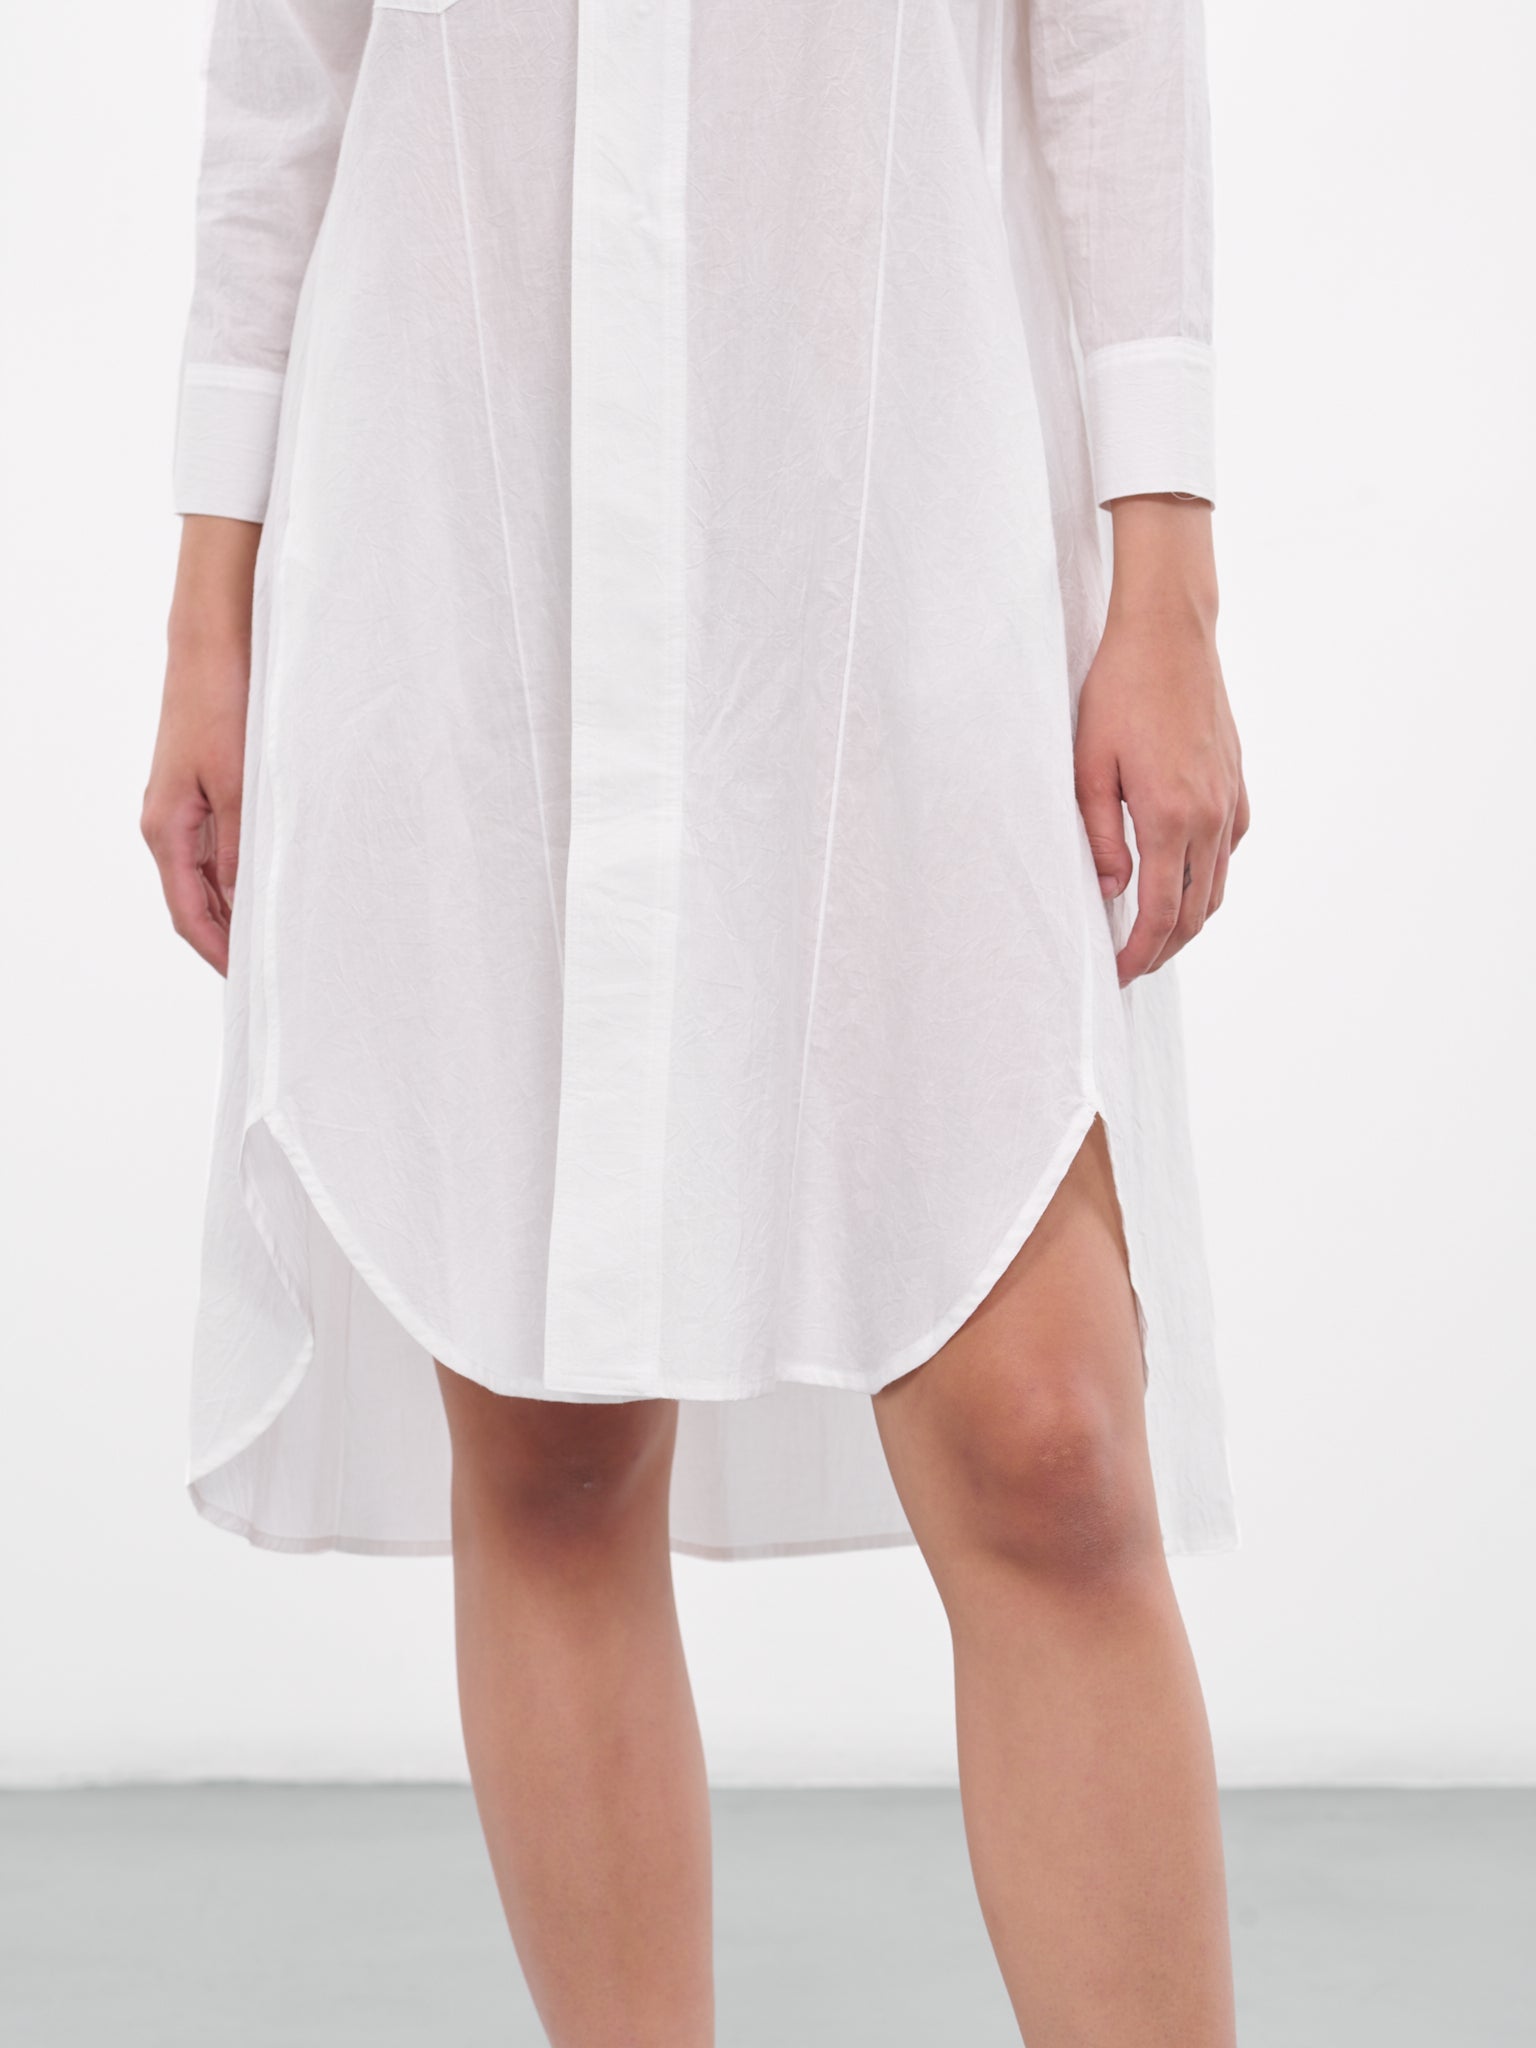 Workwear Shirt Dress (FJ-D67-005-1-OFF-WHITE)